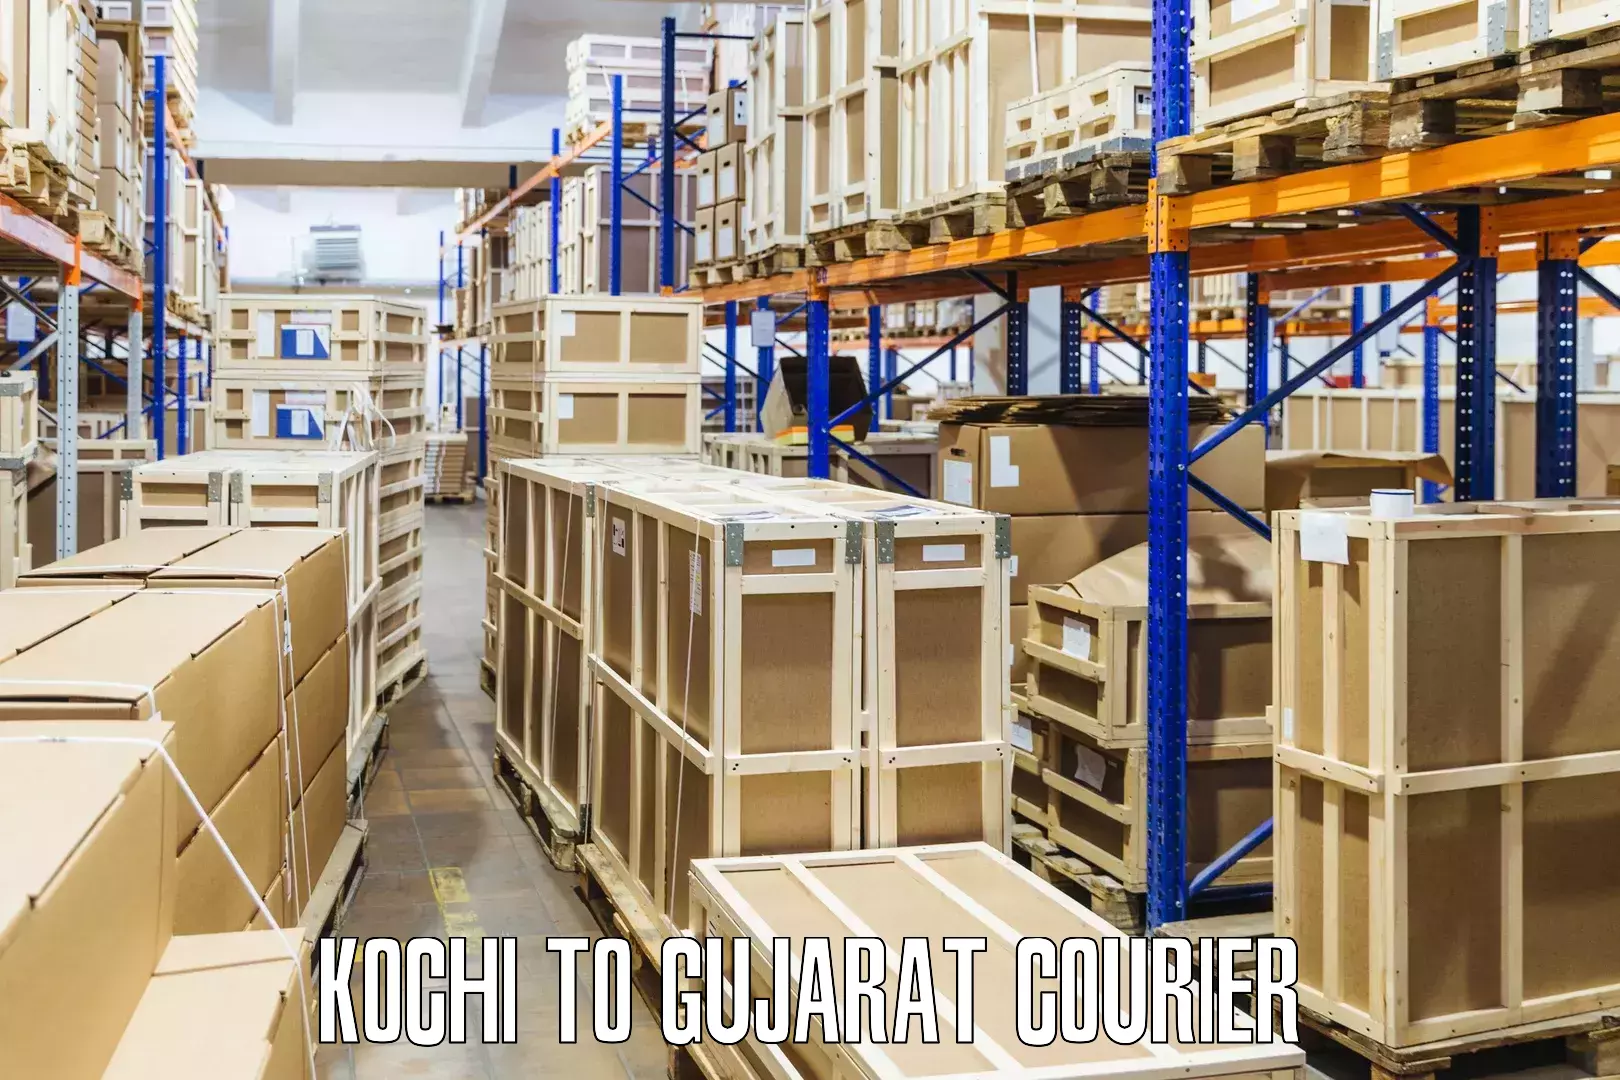 Global logistics network Kochi to Katodara